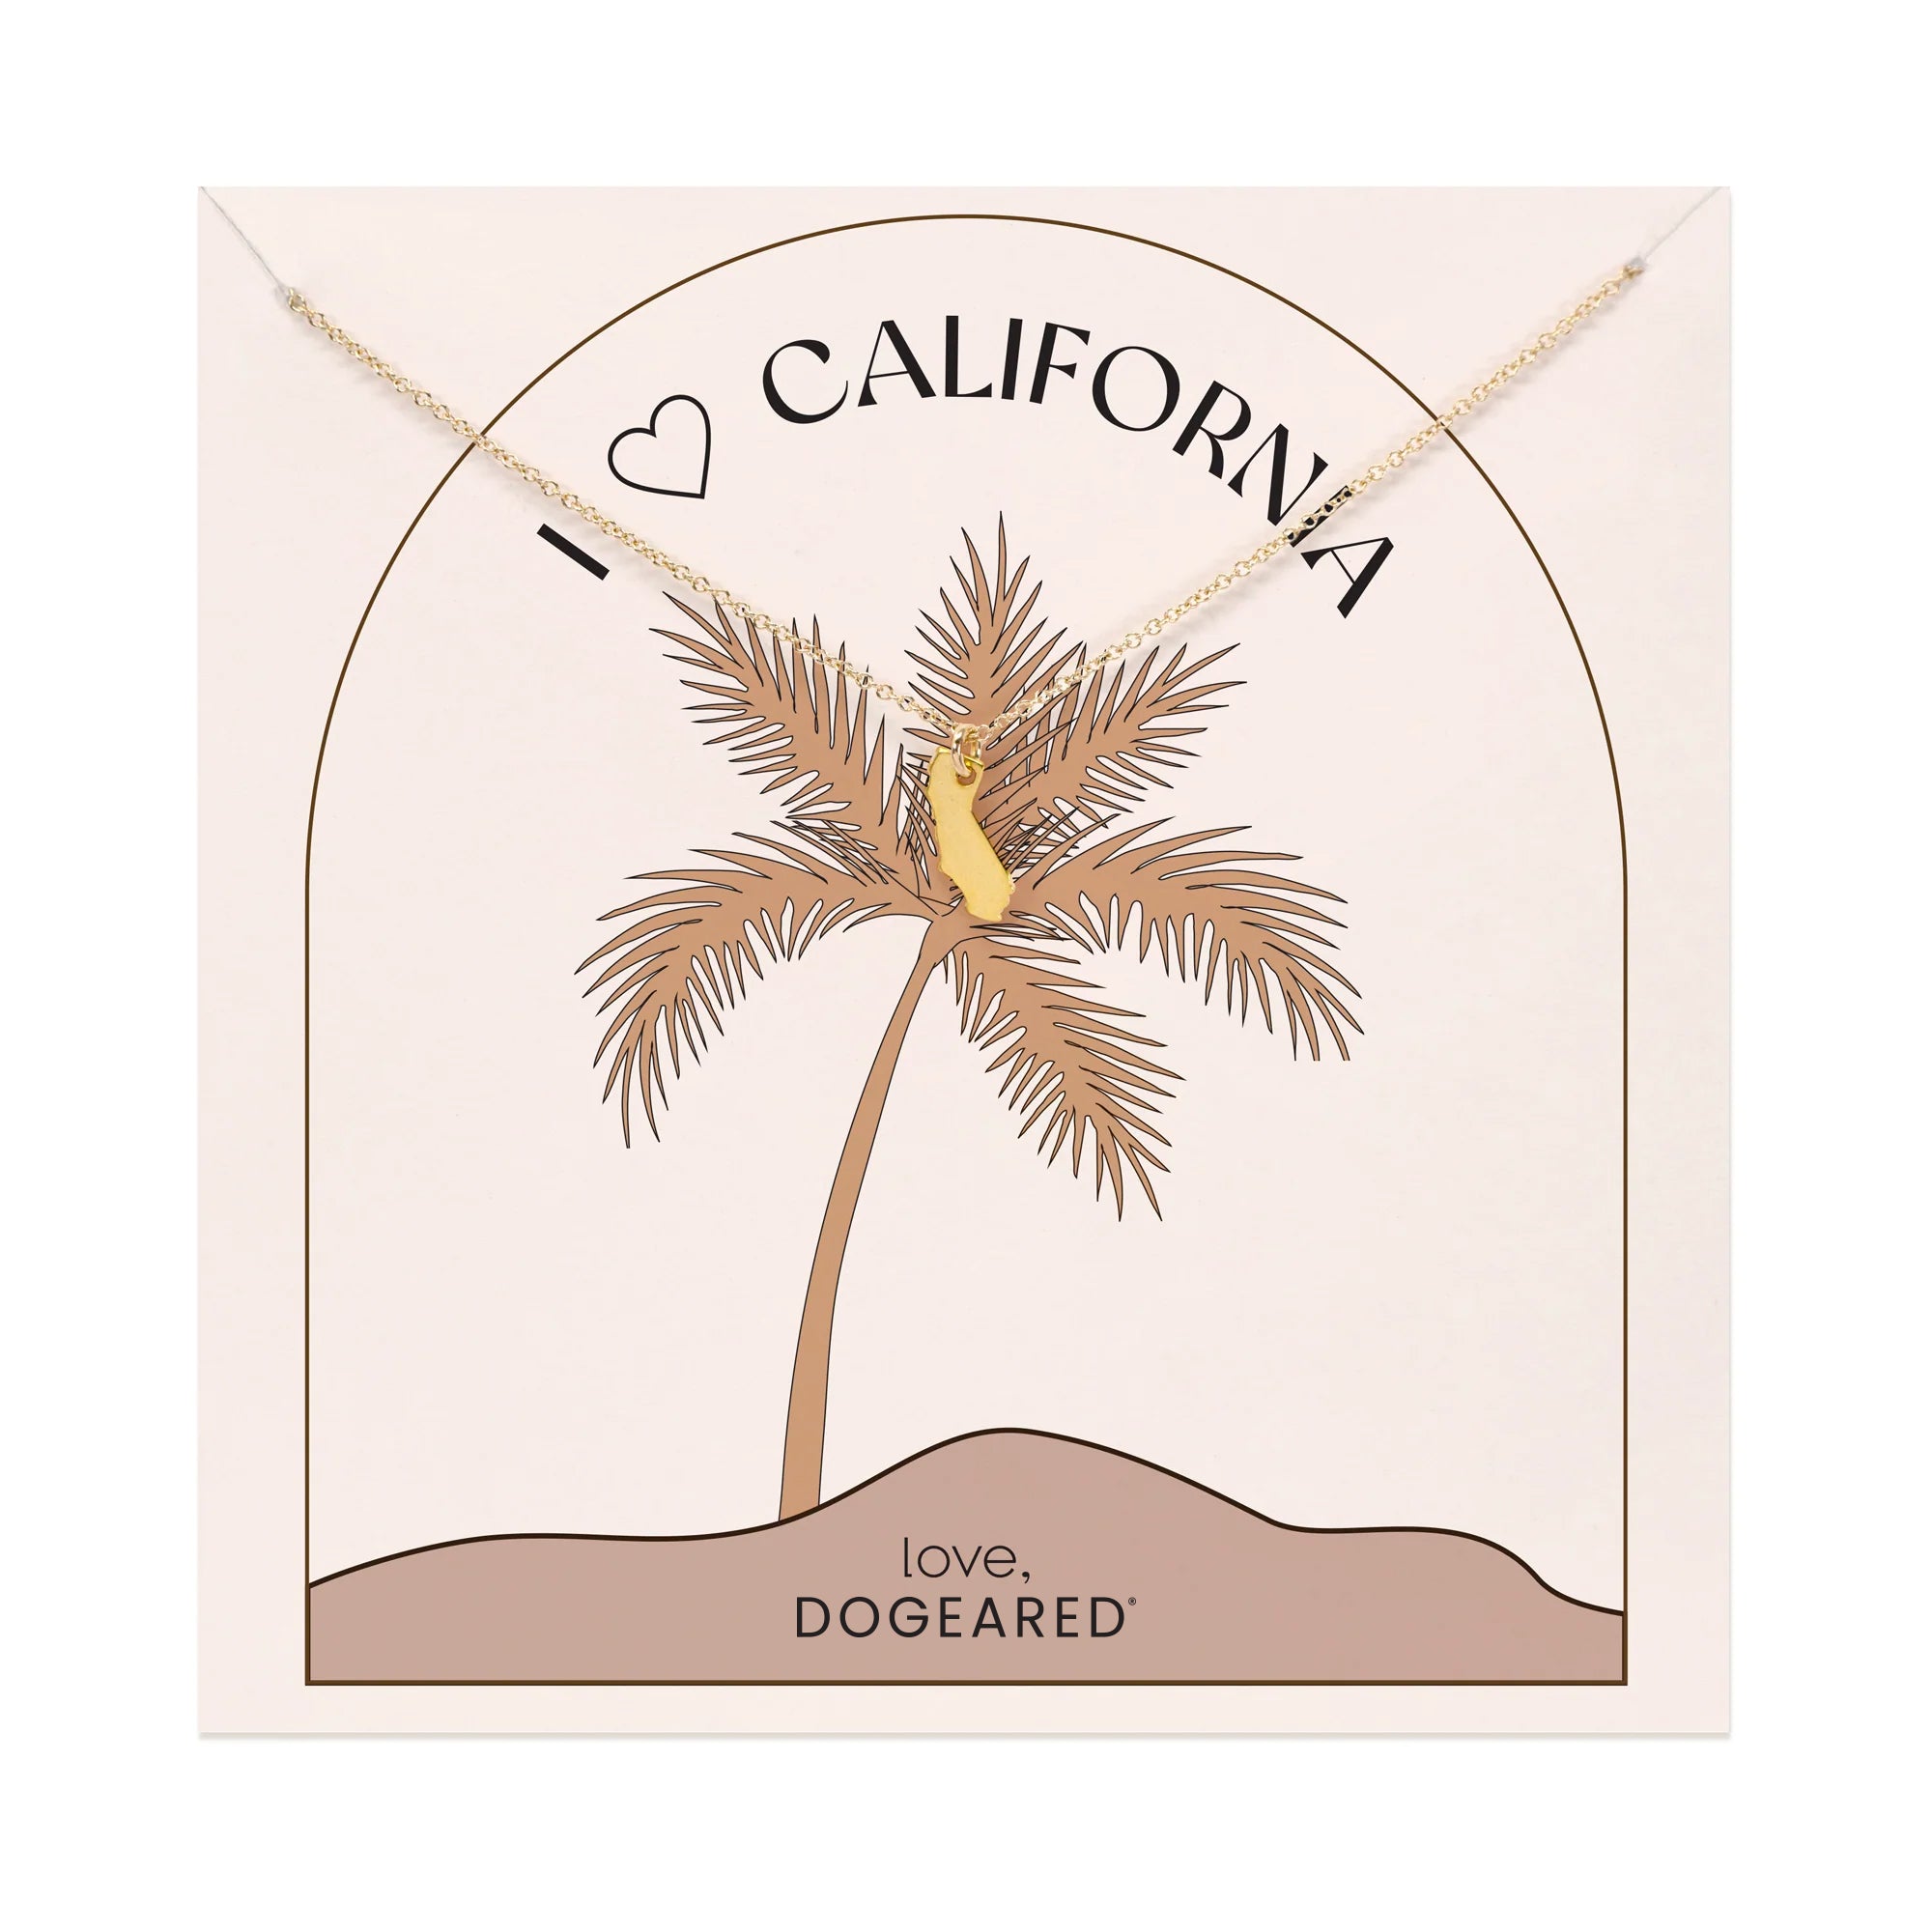 I love California charm necklace - Dogeared